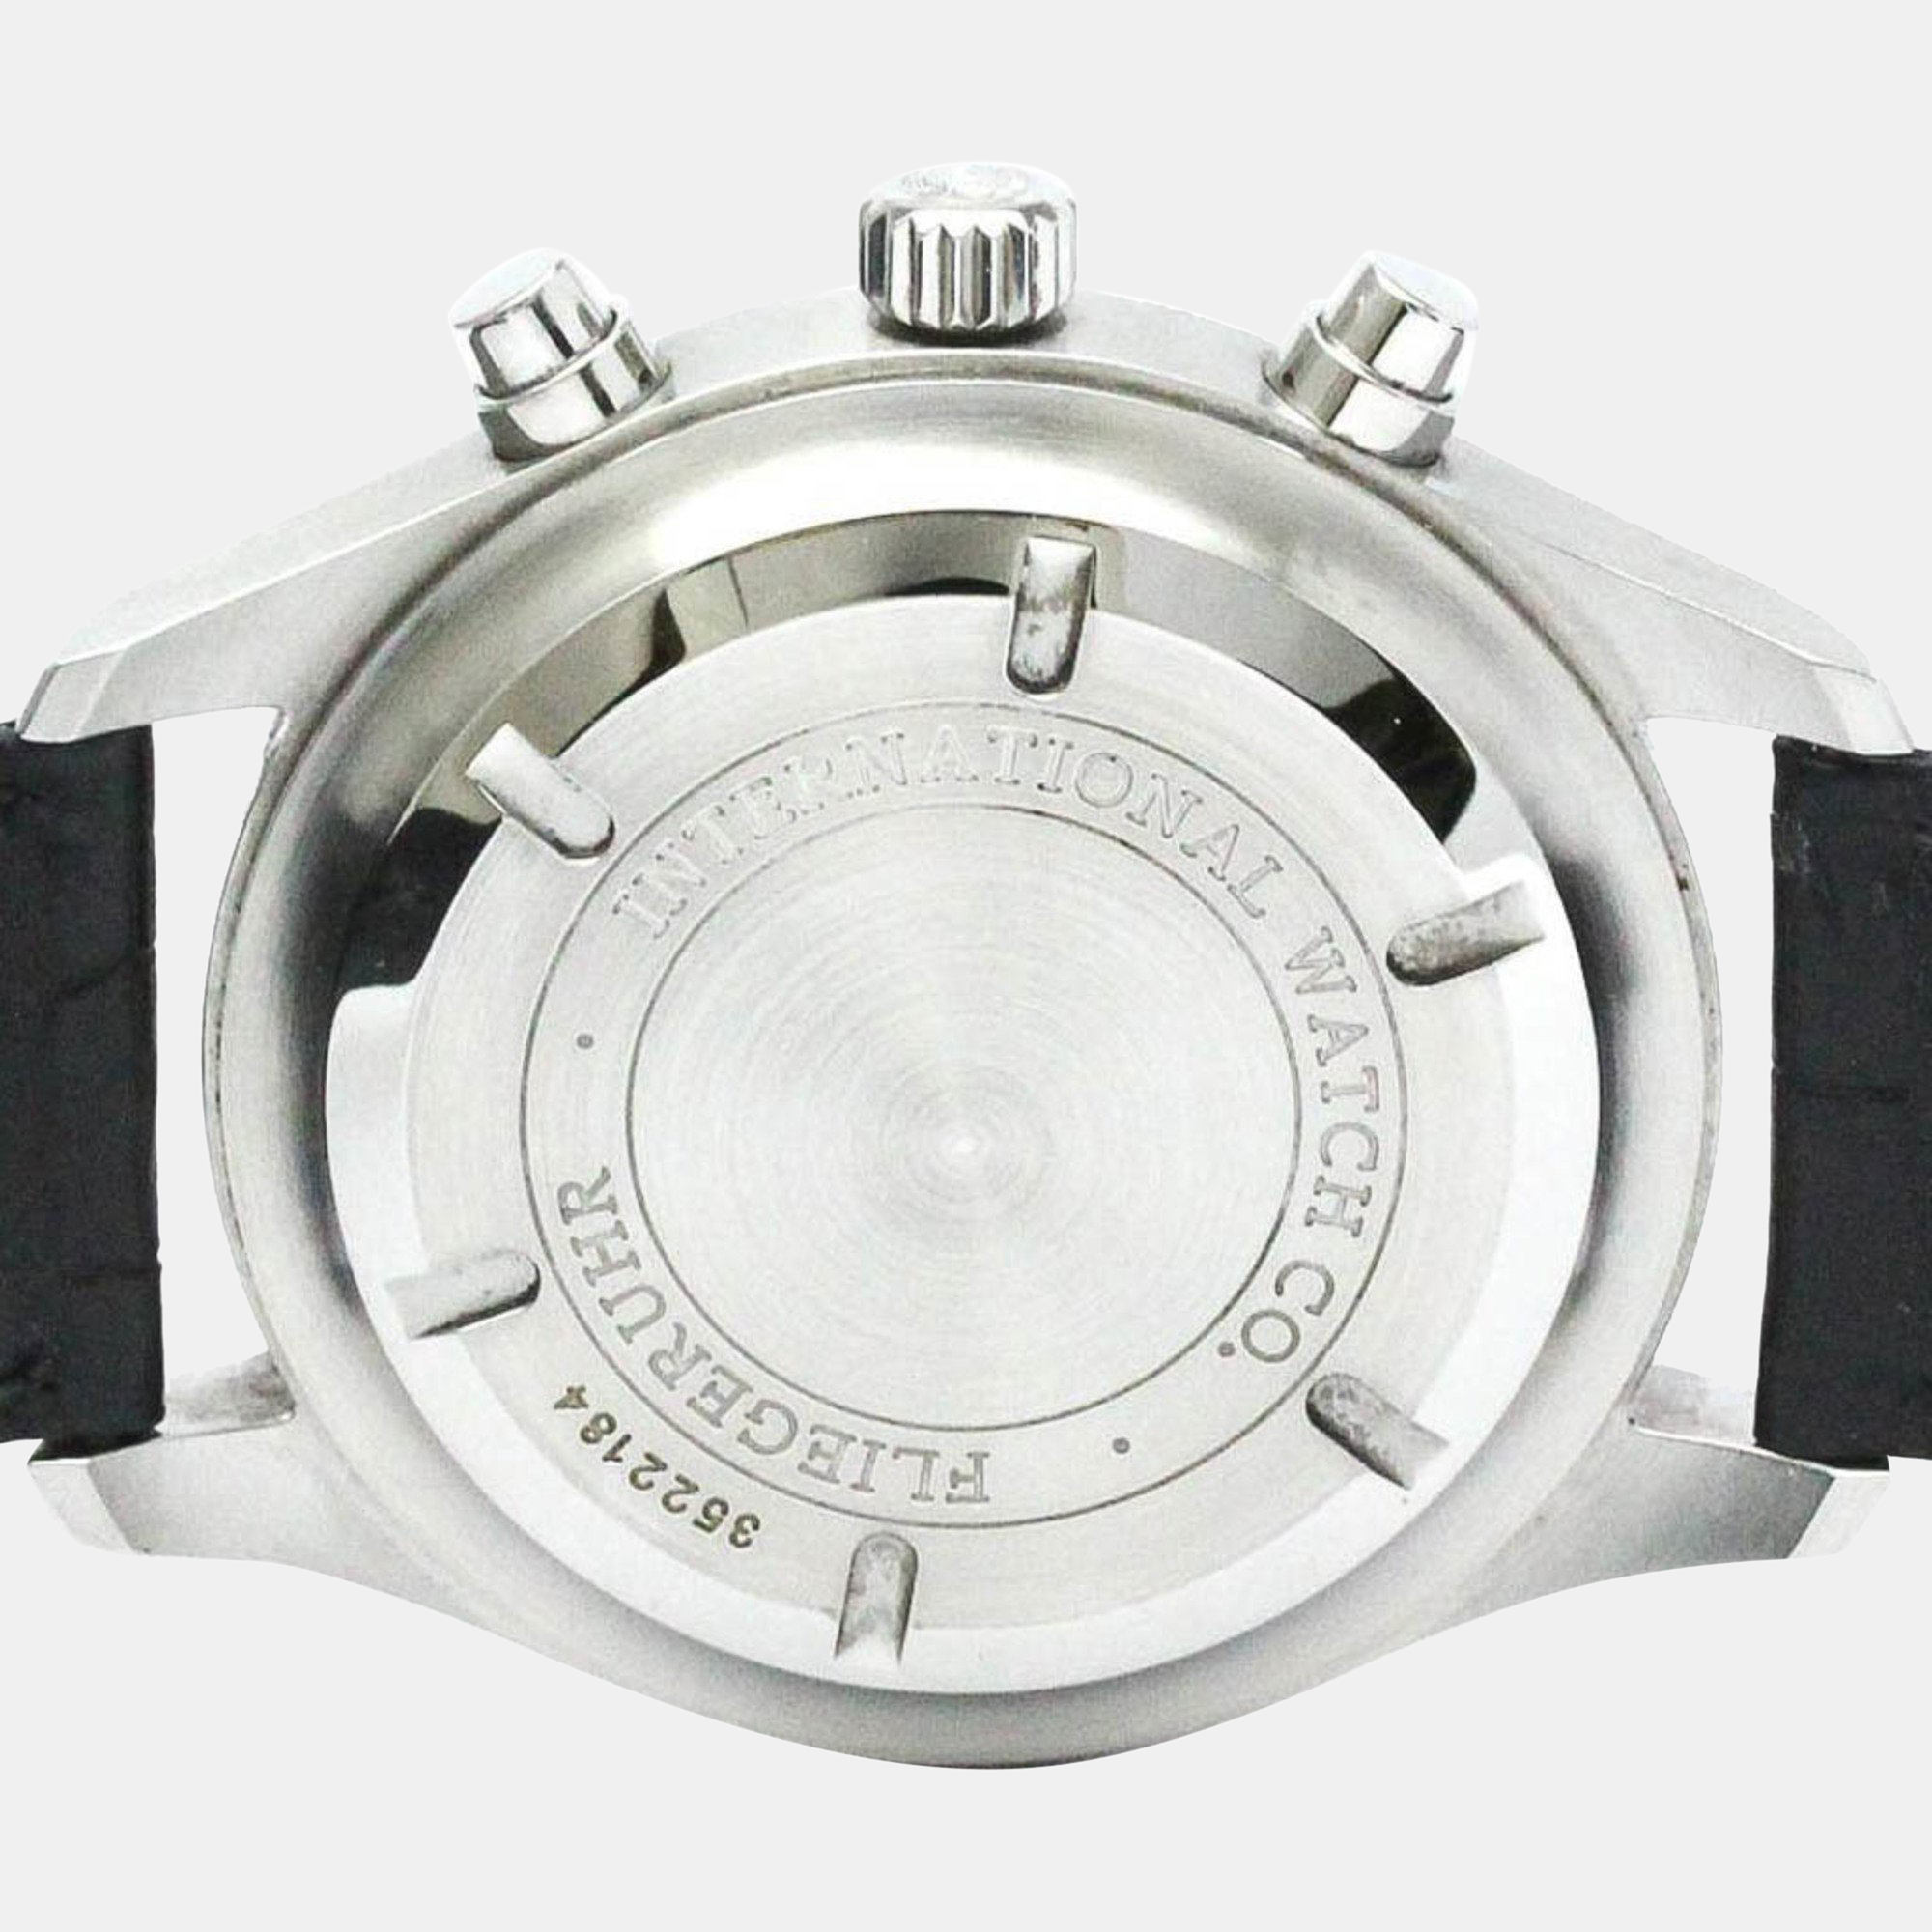 IWC Black Stainless Steel Pilot IW371701 Automatic Men's Wristwatch 42 Mm